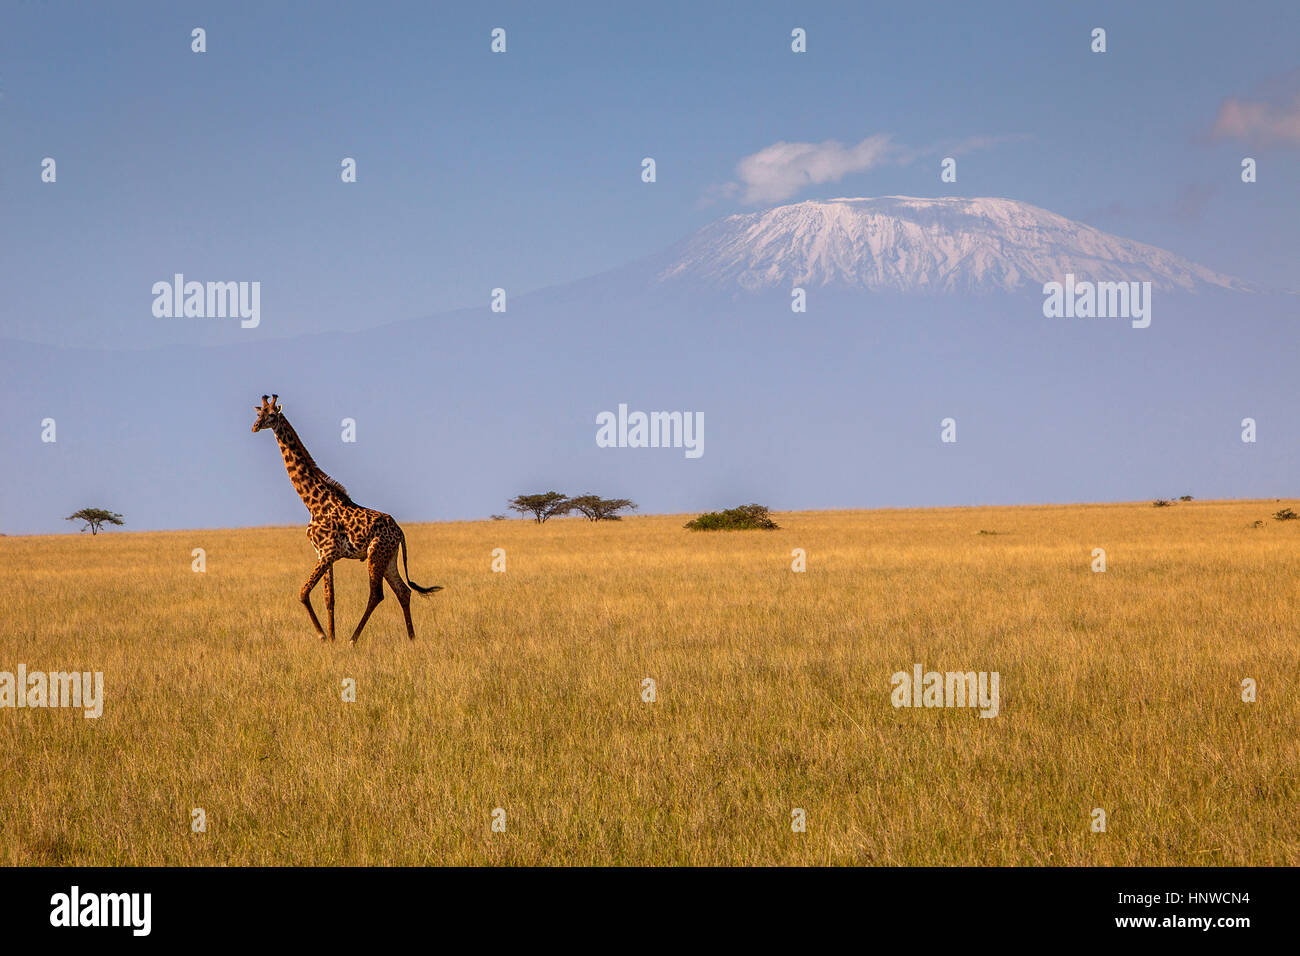 Giraffe, Giraffa camelopardalis, with Mount Kilimanjaro in the background, Chyulu Hills National Park, Kenya Stock Photo